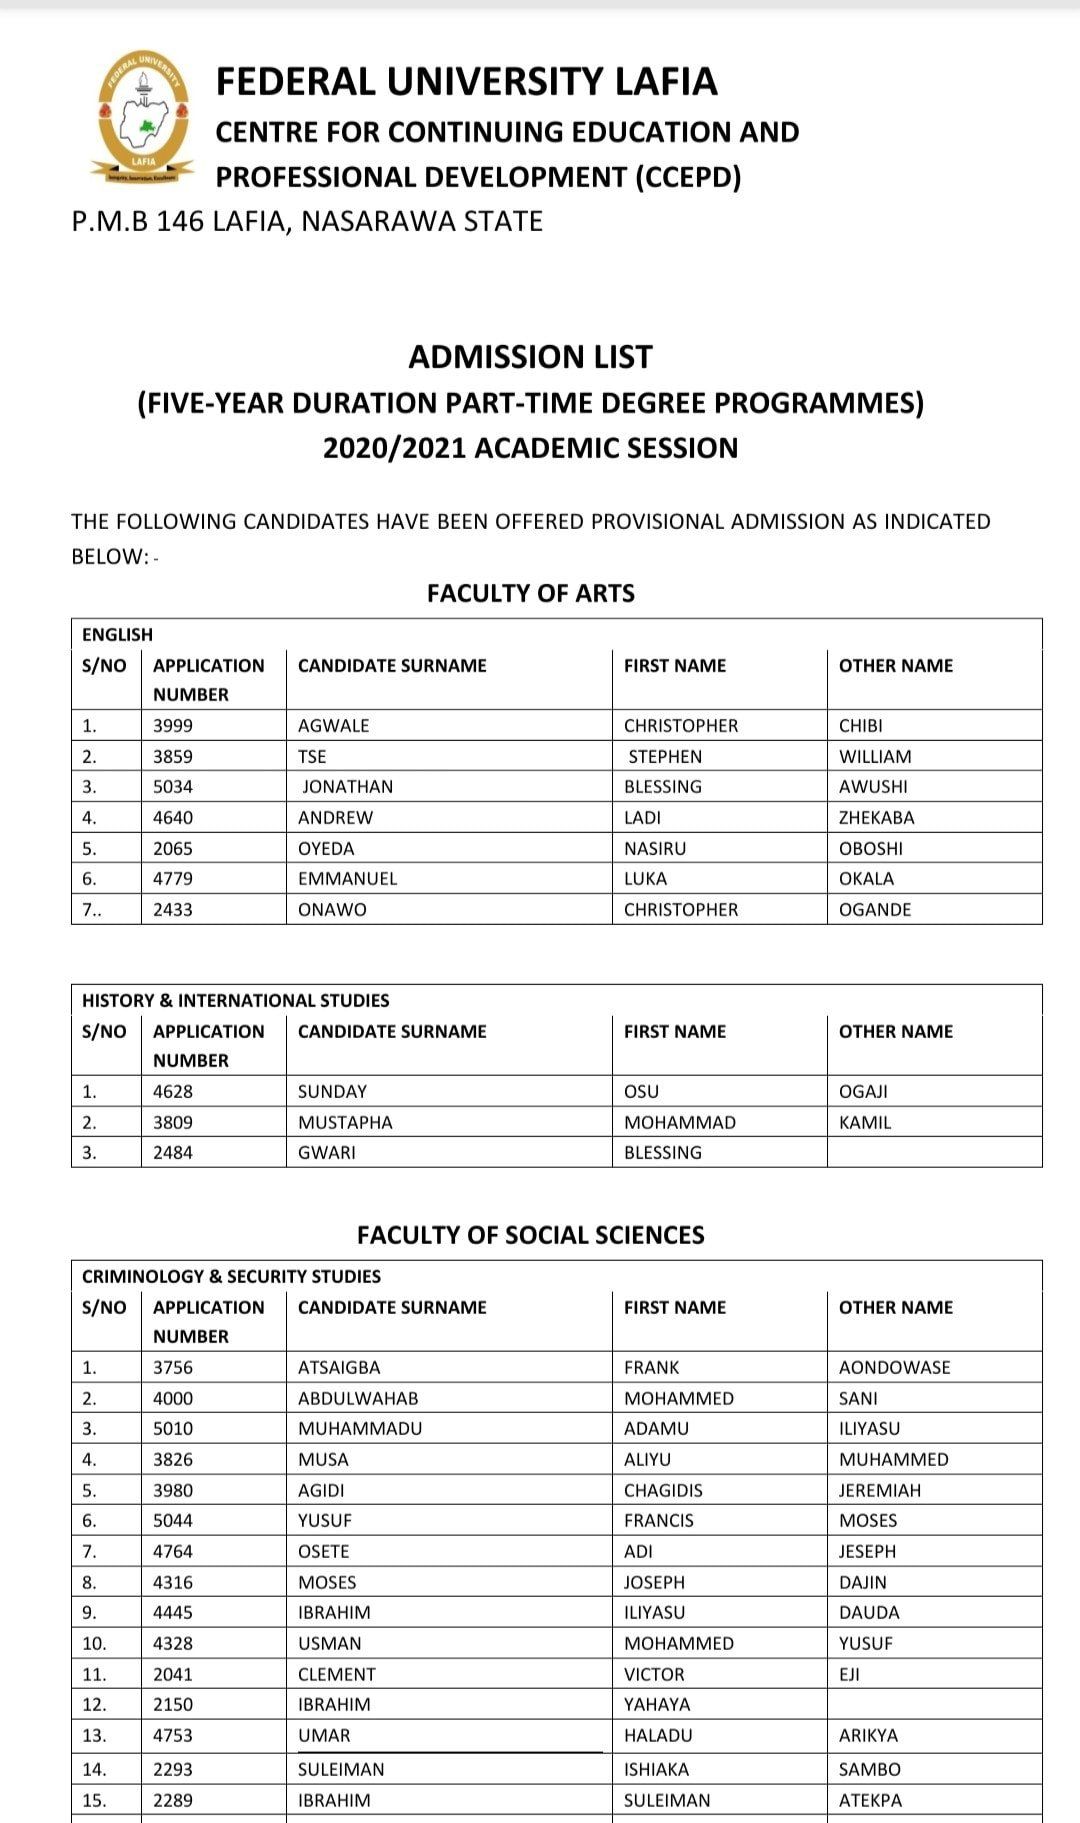 FULAFIA Part-Time Degree Admission List